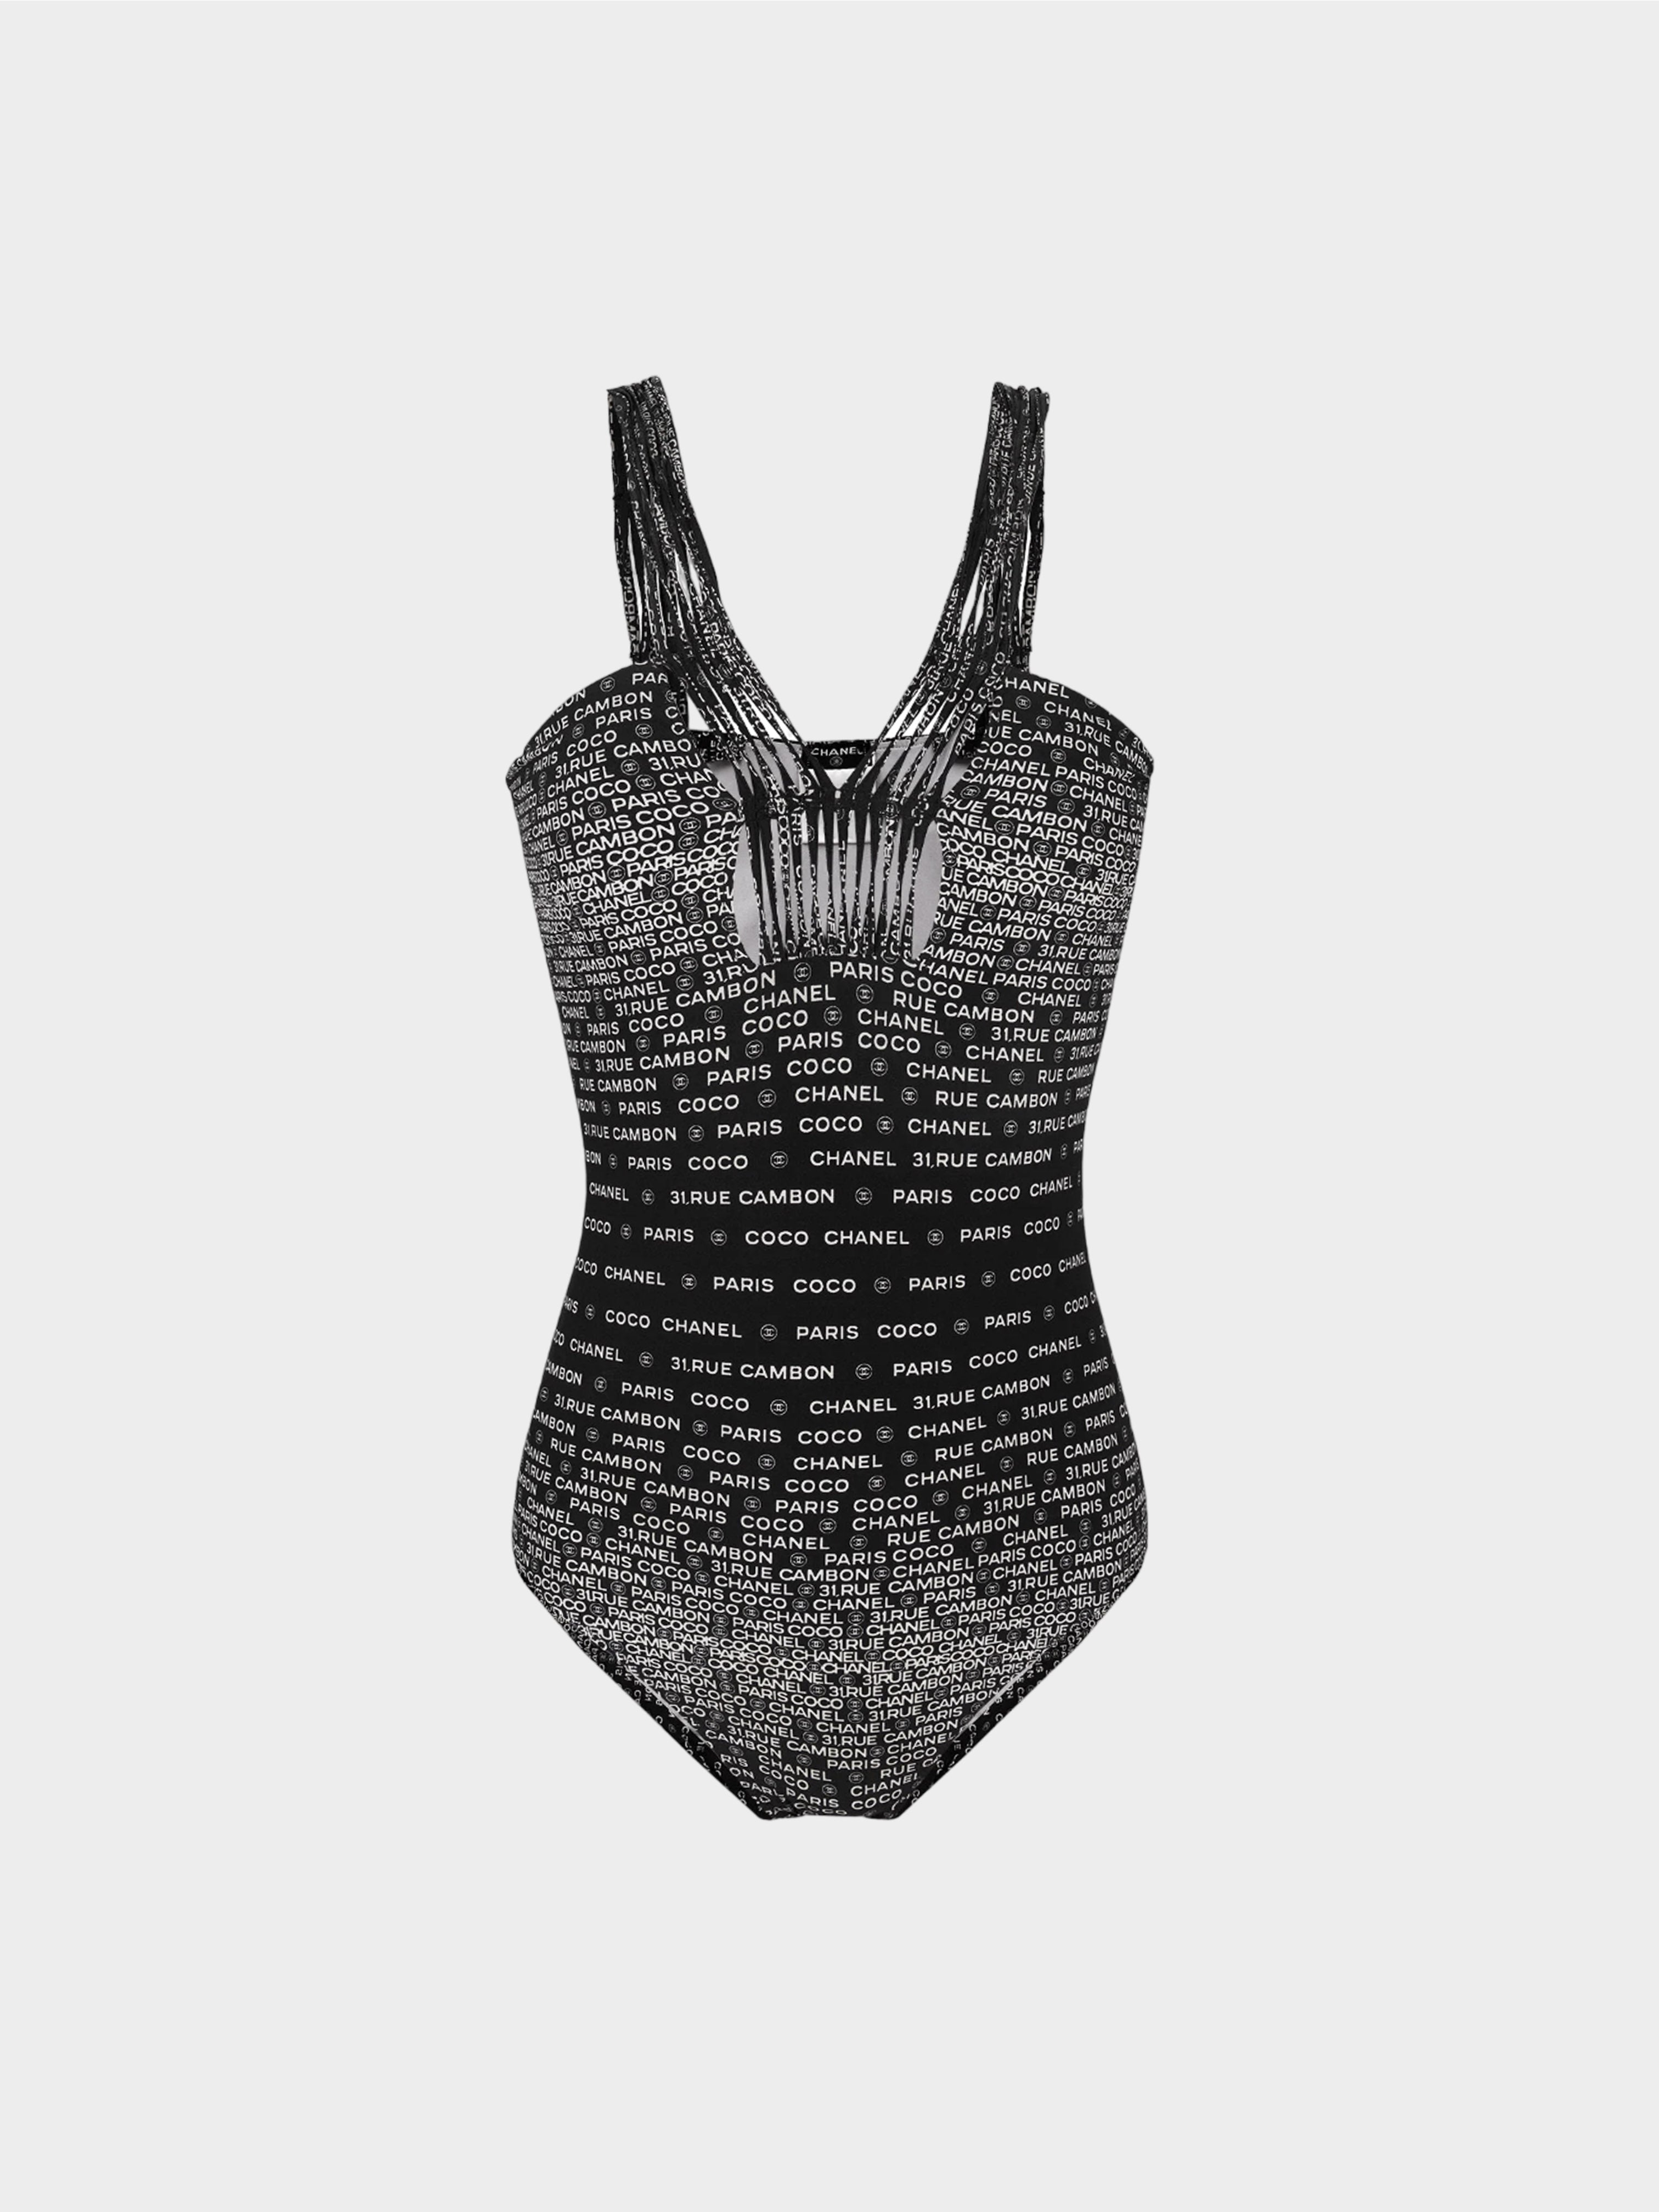 CHANEL 2009 Black BIKINI Swimsuit Bodysuit One Piece Chanel print